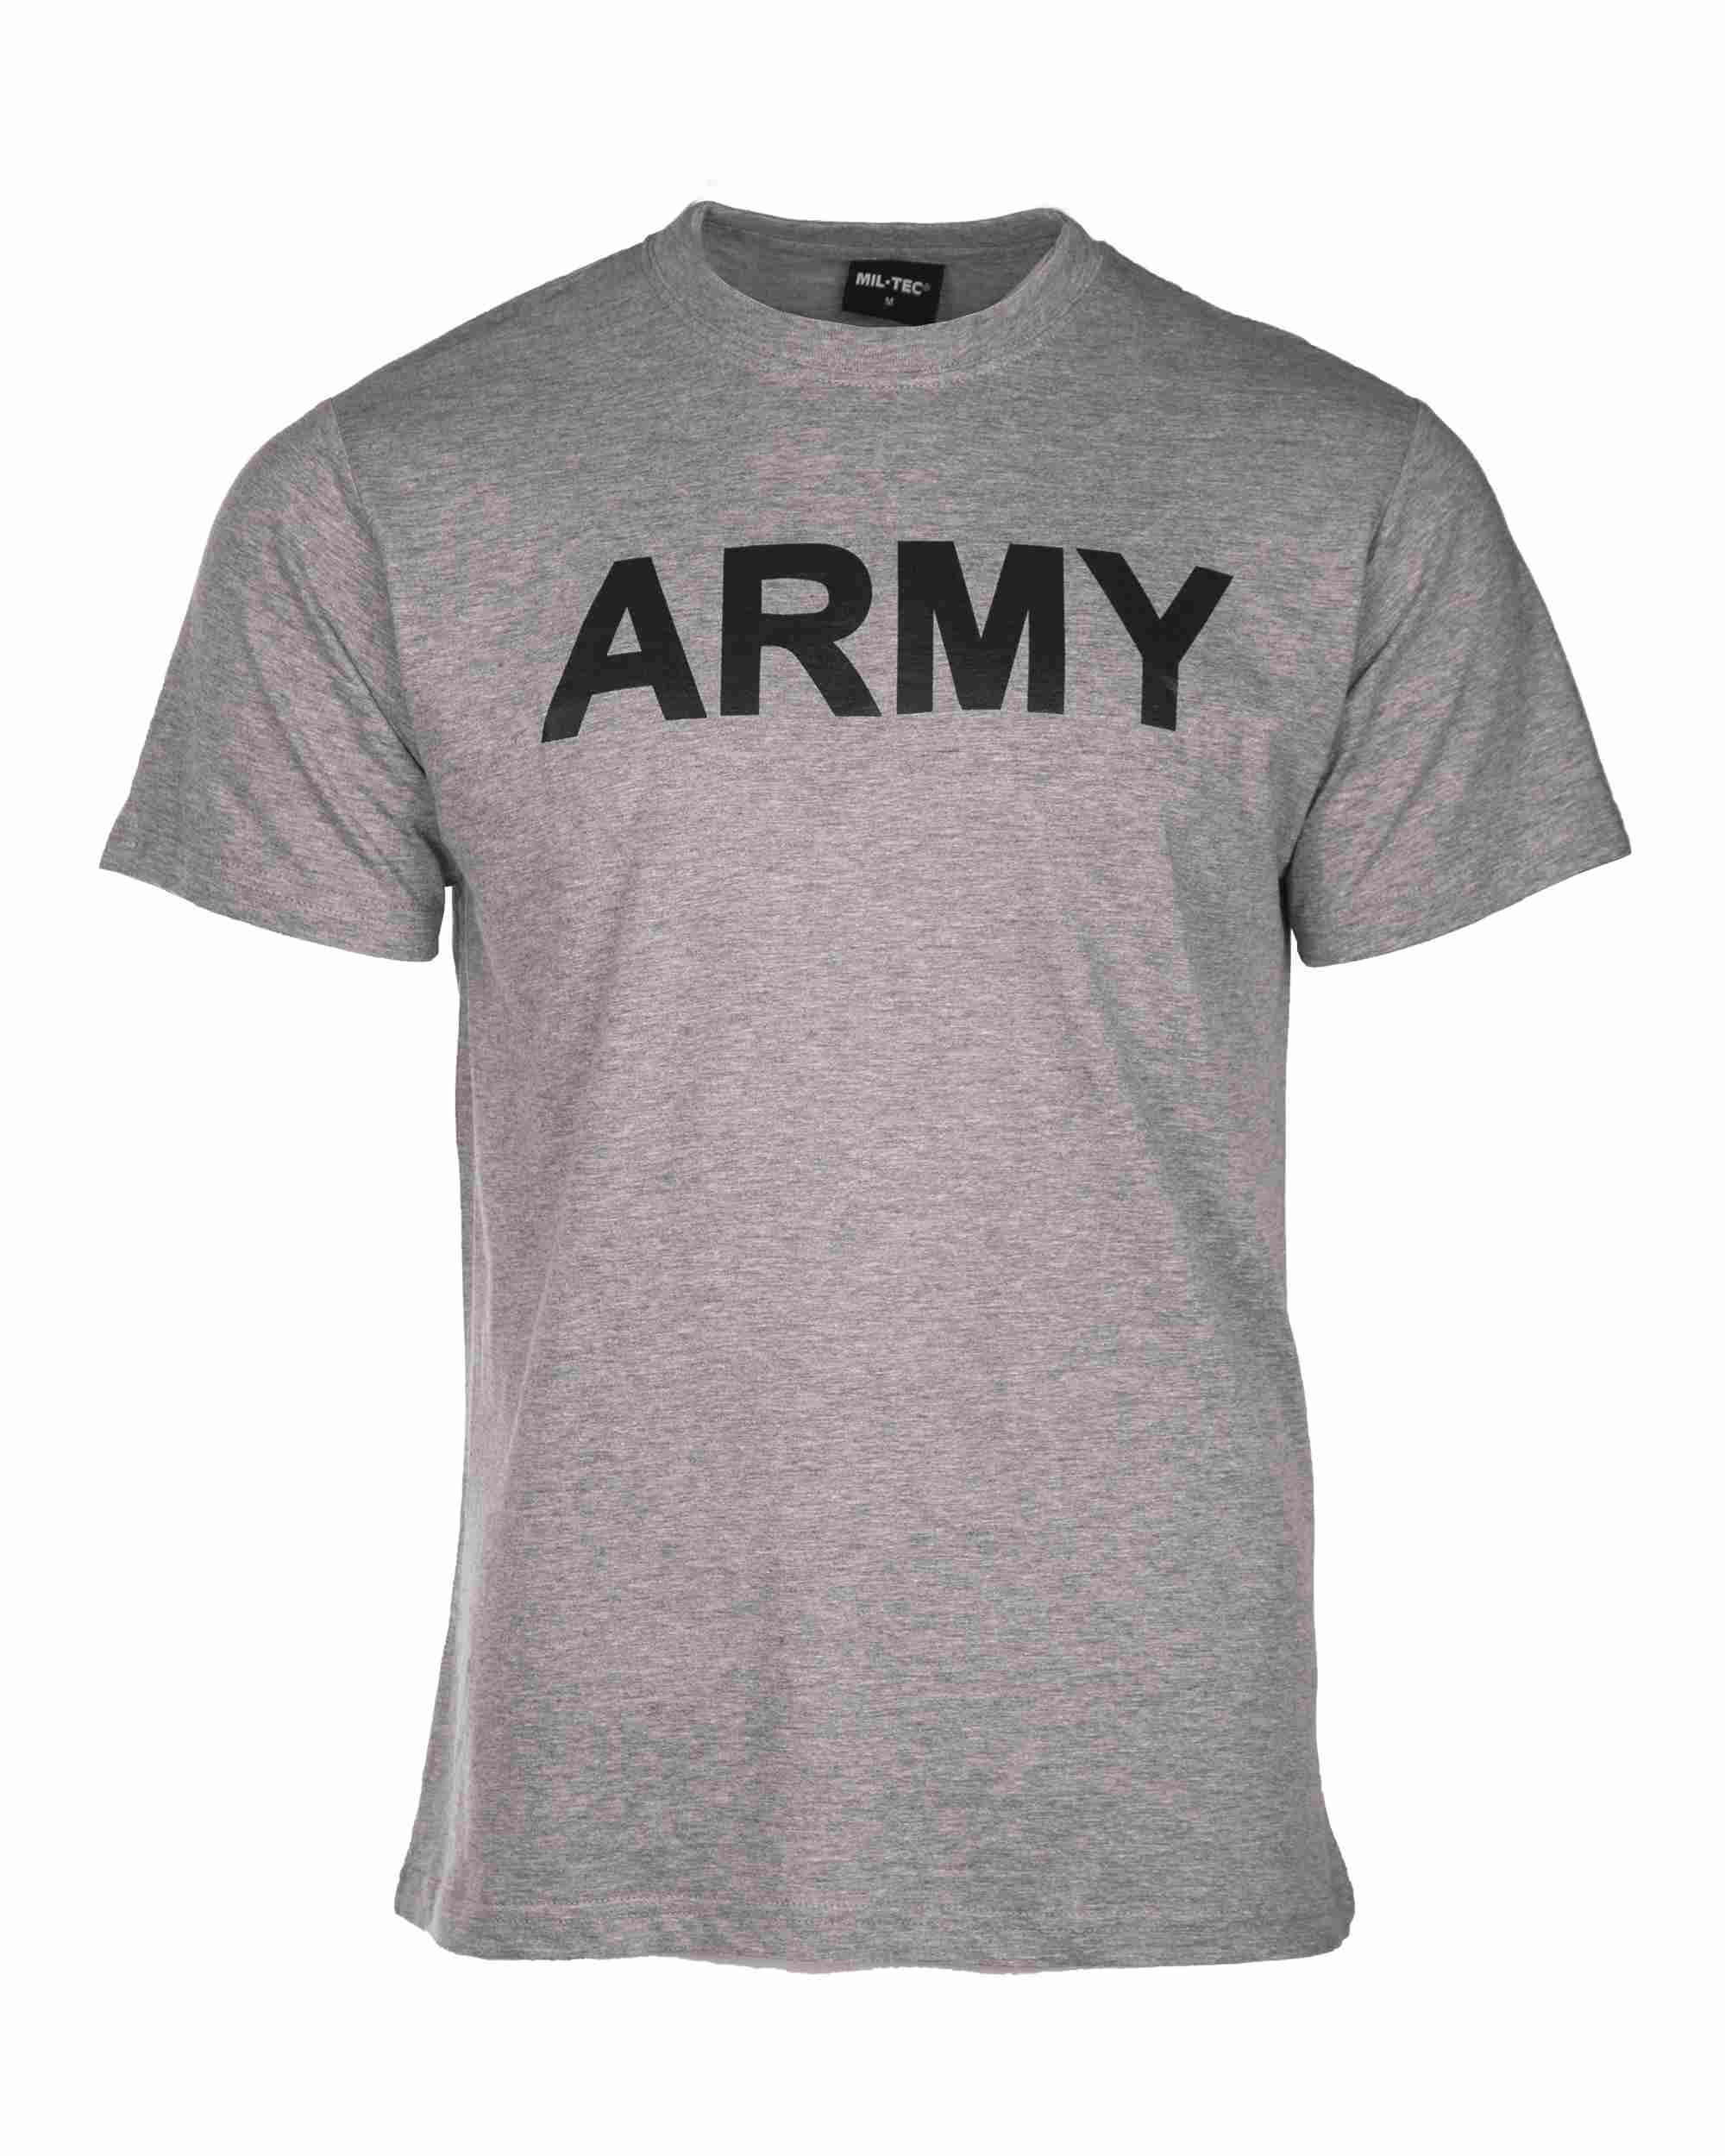 T-Shirt Mit Druck 'Army' Grau